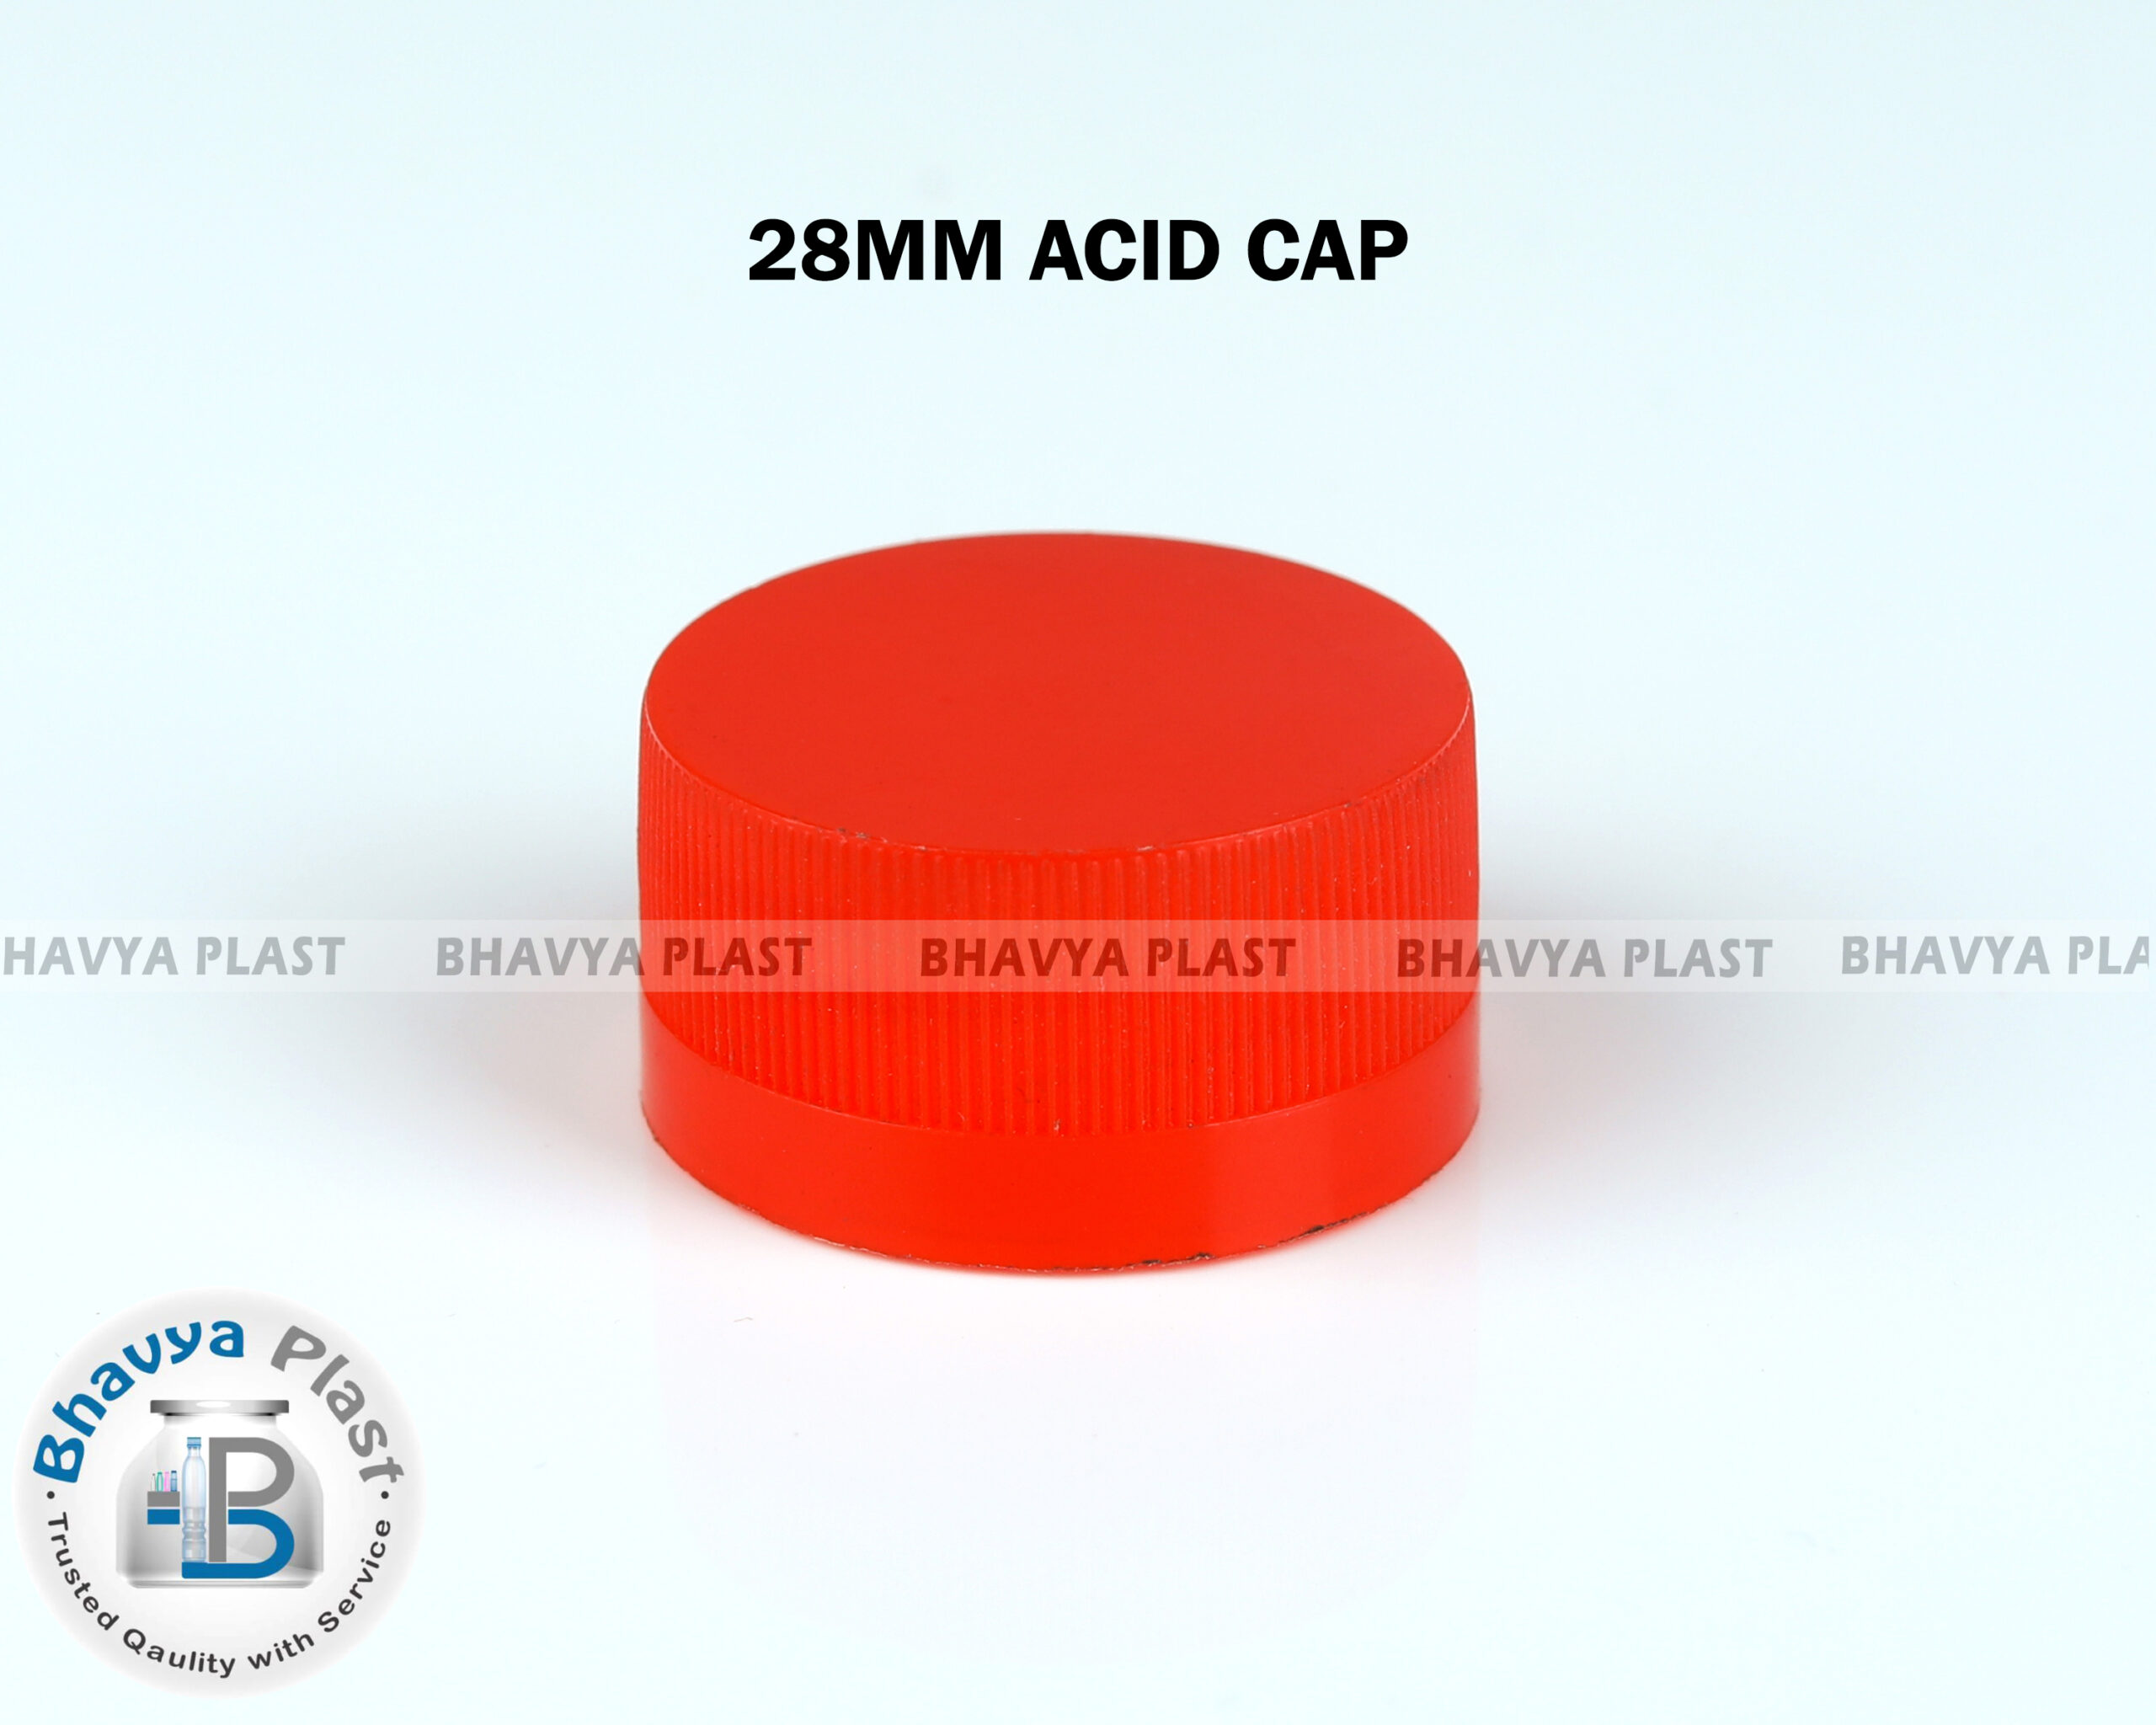 28MM ACID CAP - Bhavya Plast